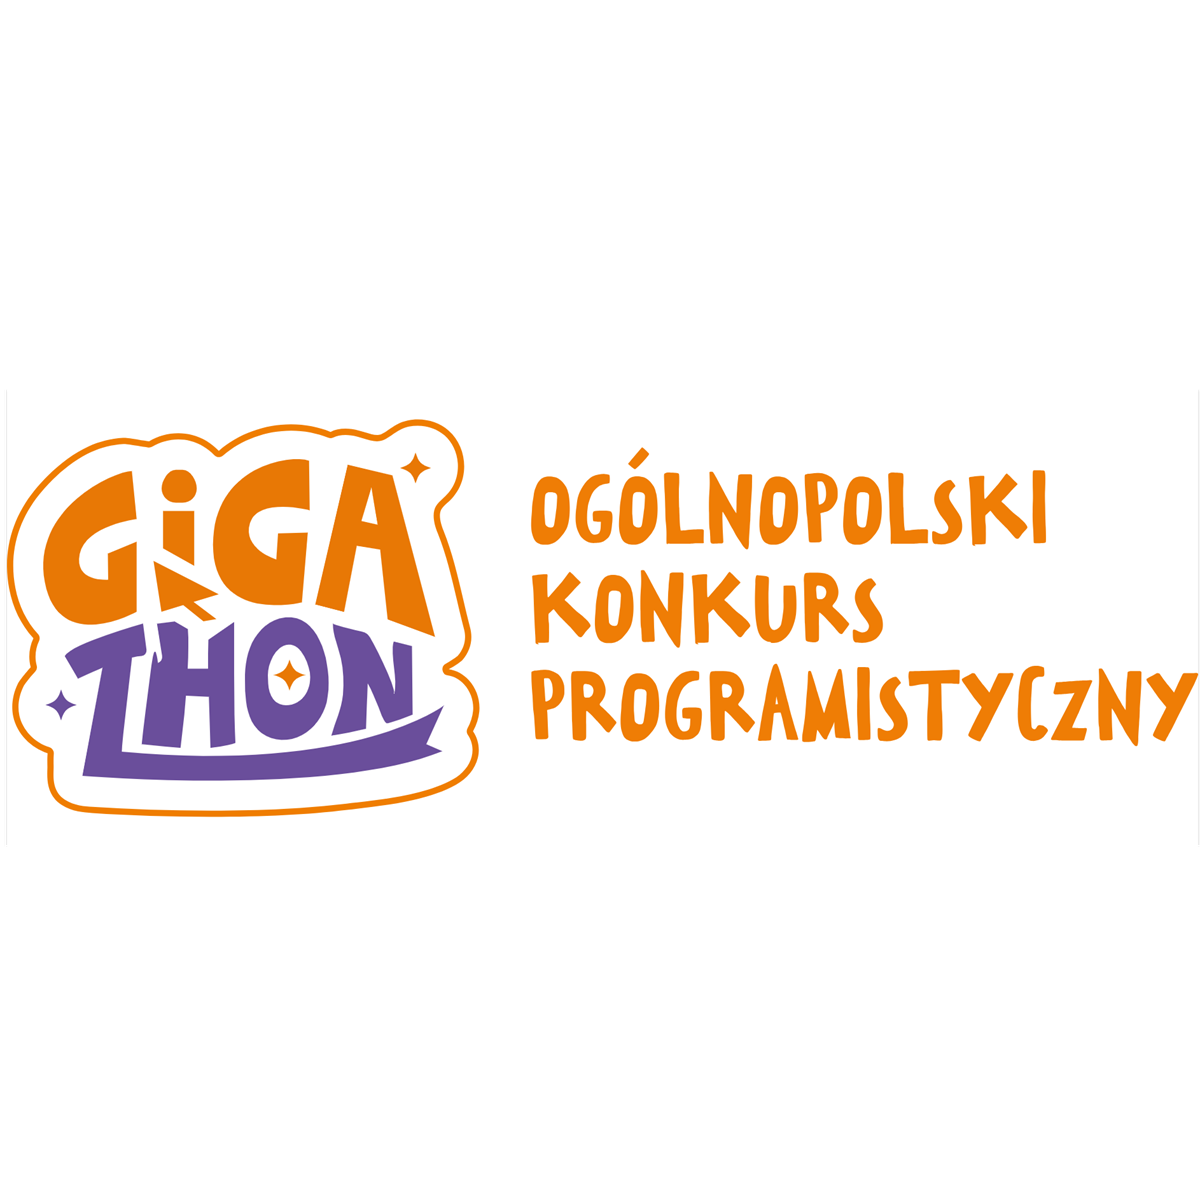 Ogólnopolski Konkurs Programistyczny Gigathon - logo